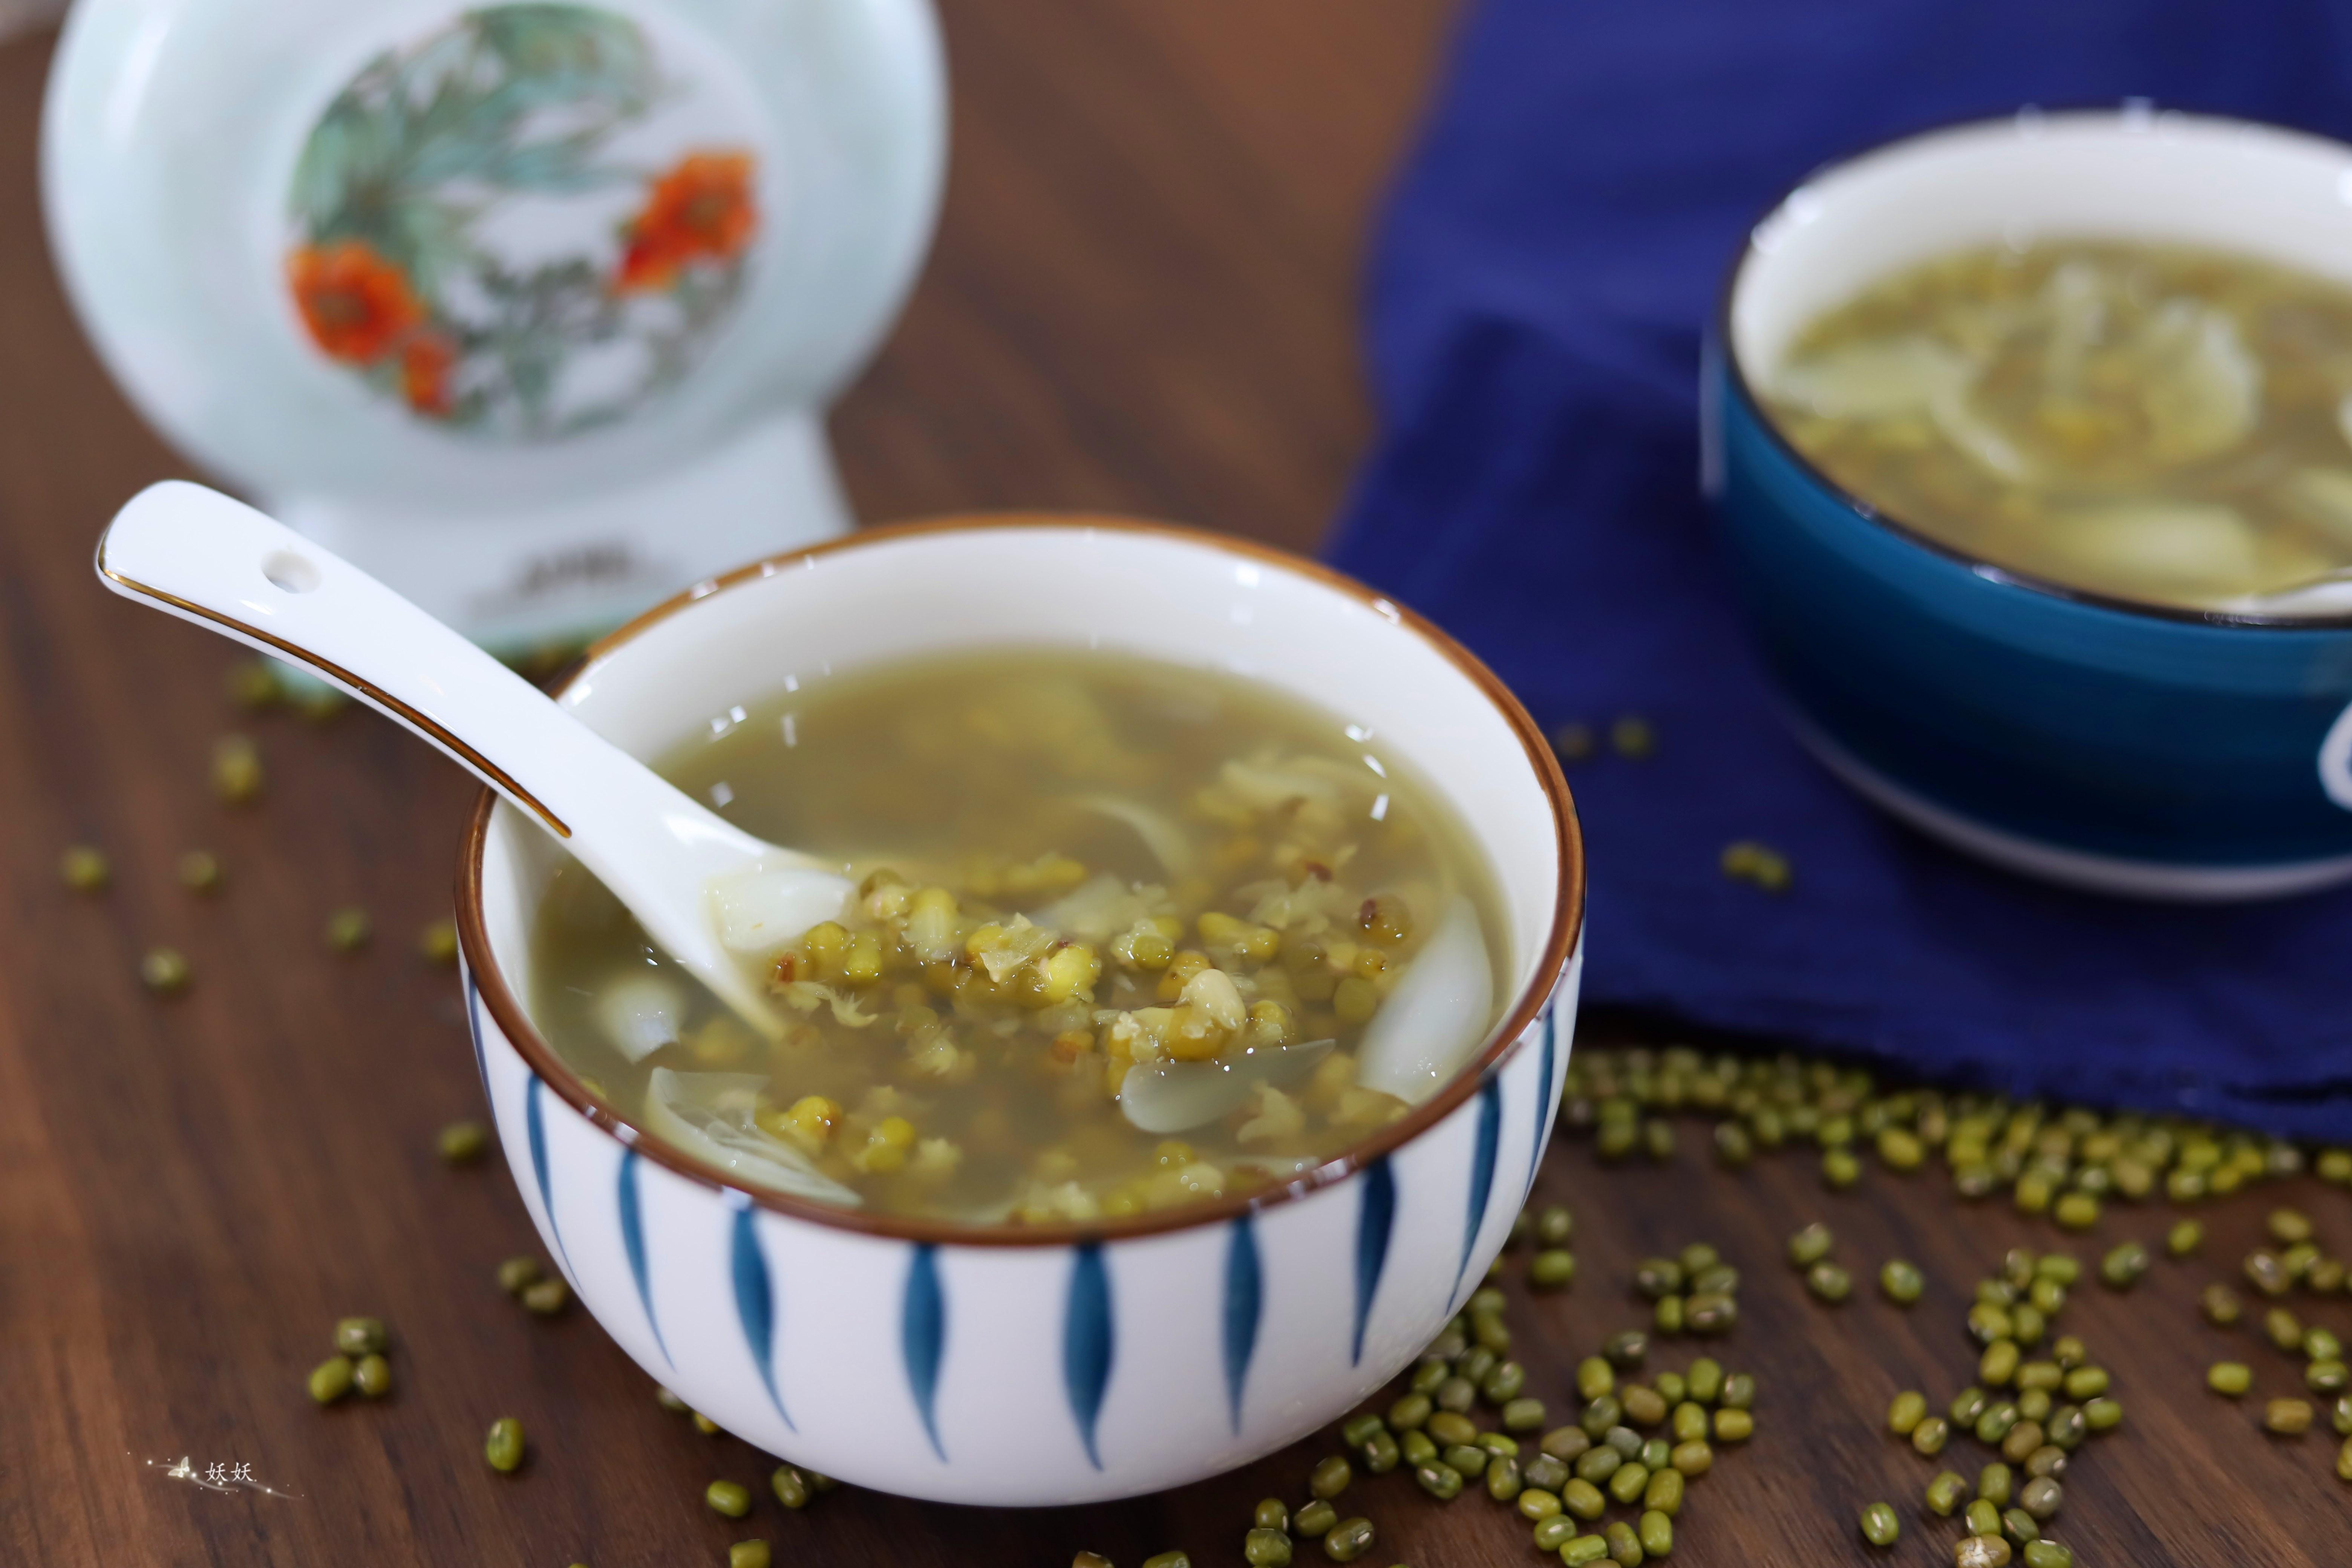 【百合绿豆汤】古人美容养颜必备的美食，简单又美味！_哔哩哔哩 (゜-゜)つロ 干杯~-bilibili